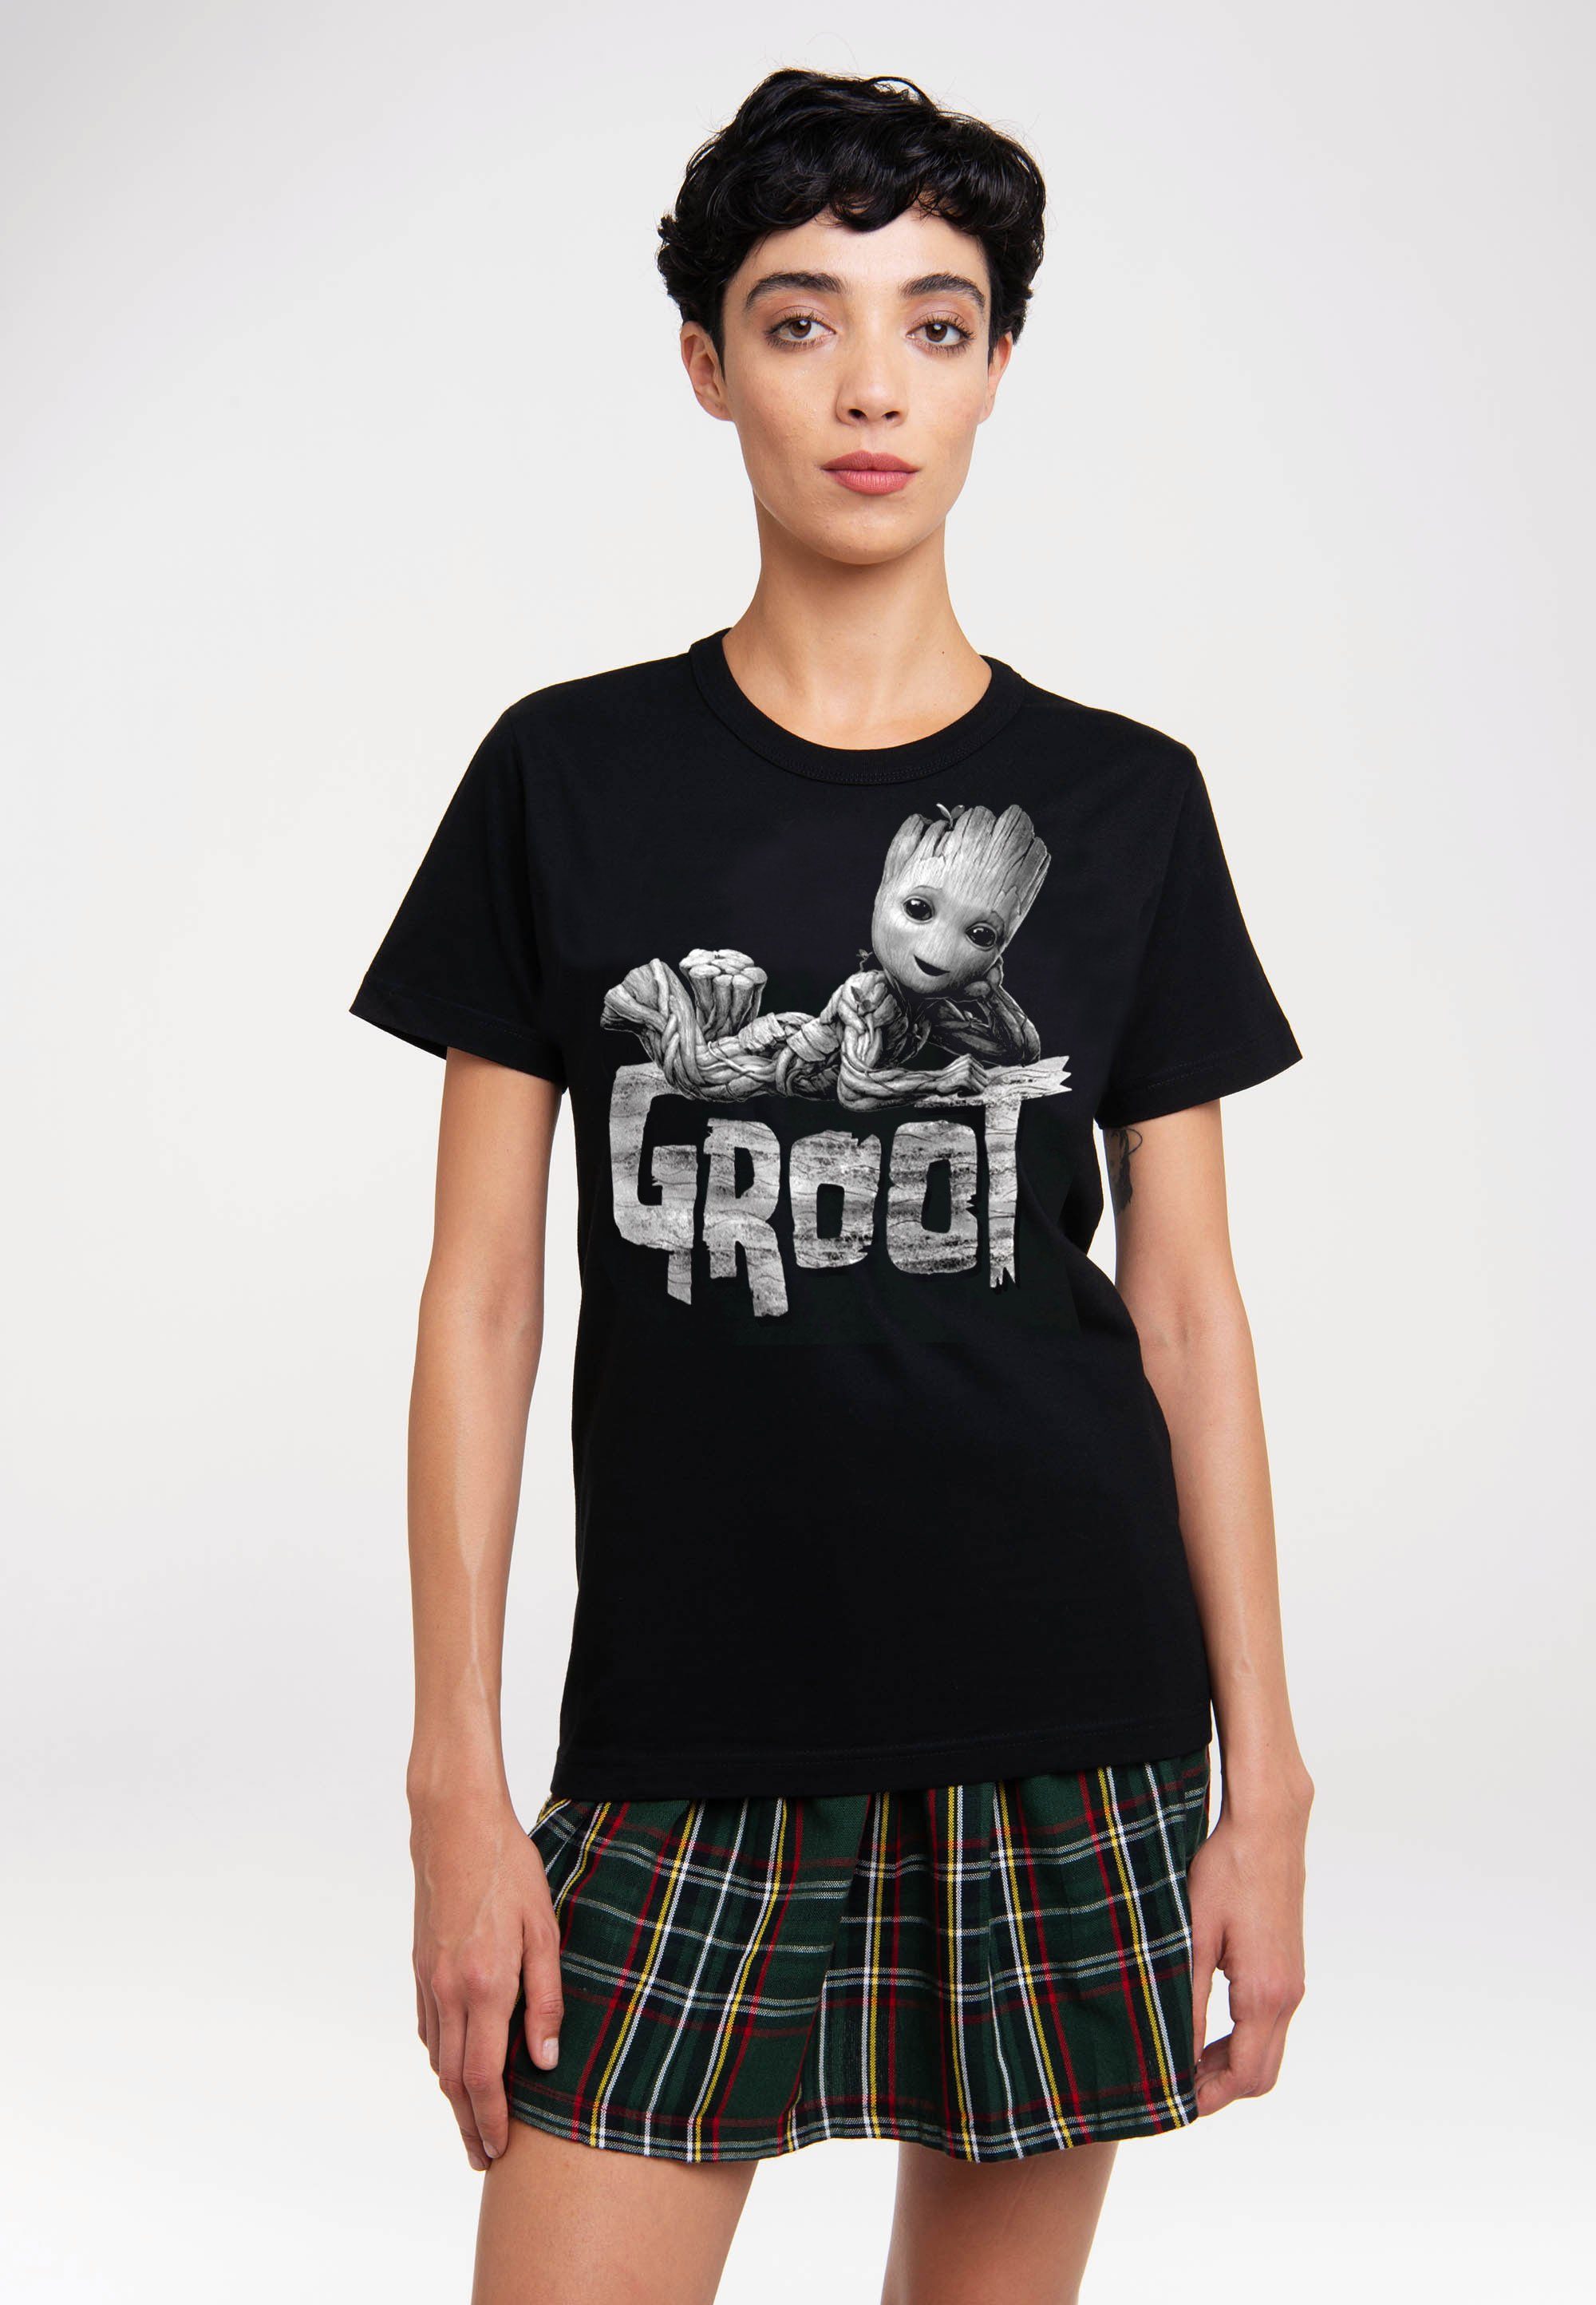 LOGOSHIRT Marvel Print Groot mit - T-Shirt witzigem Groot